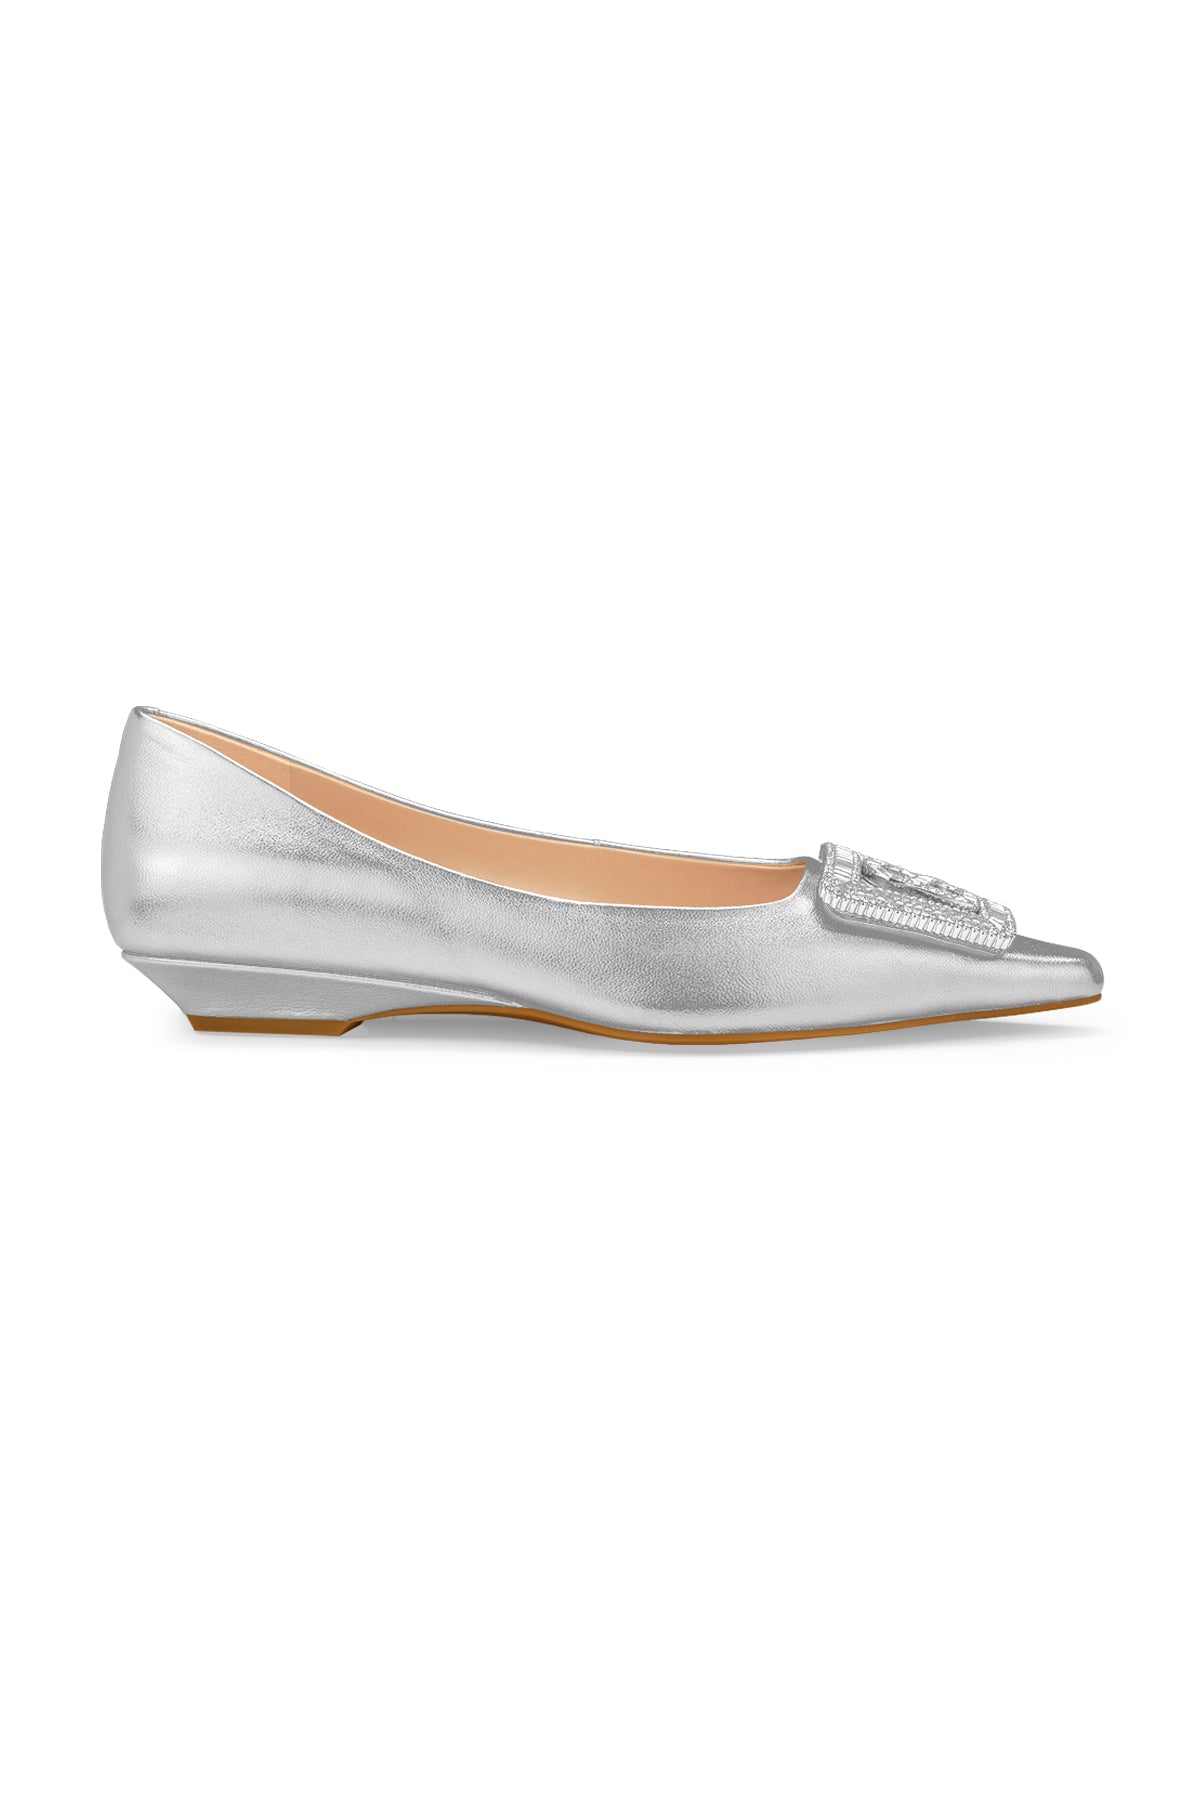 Lavish Shoes - Silver